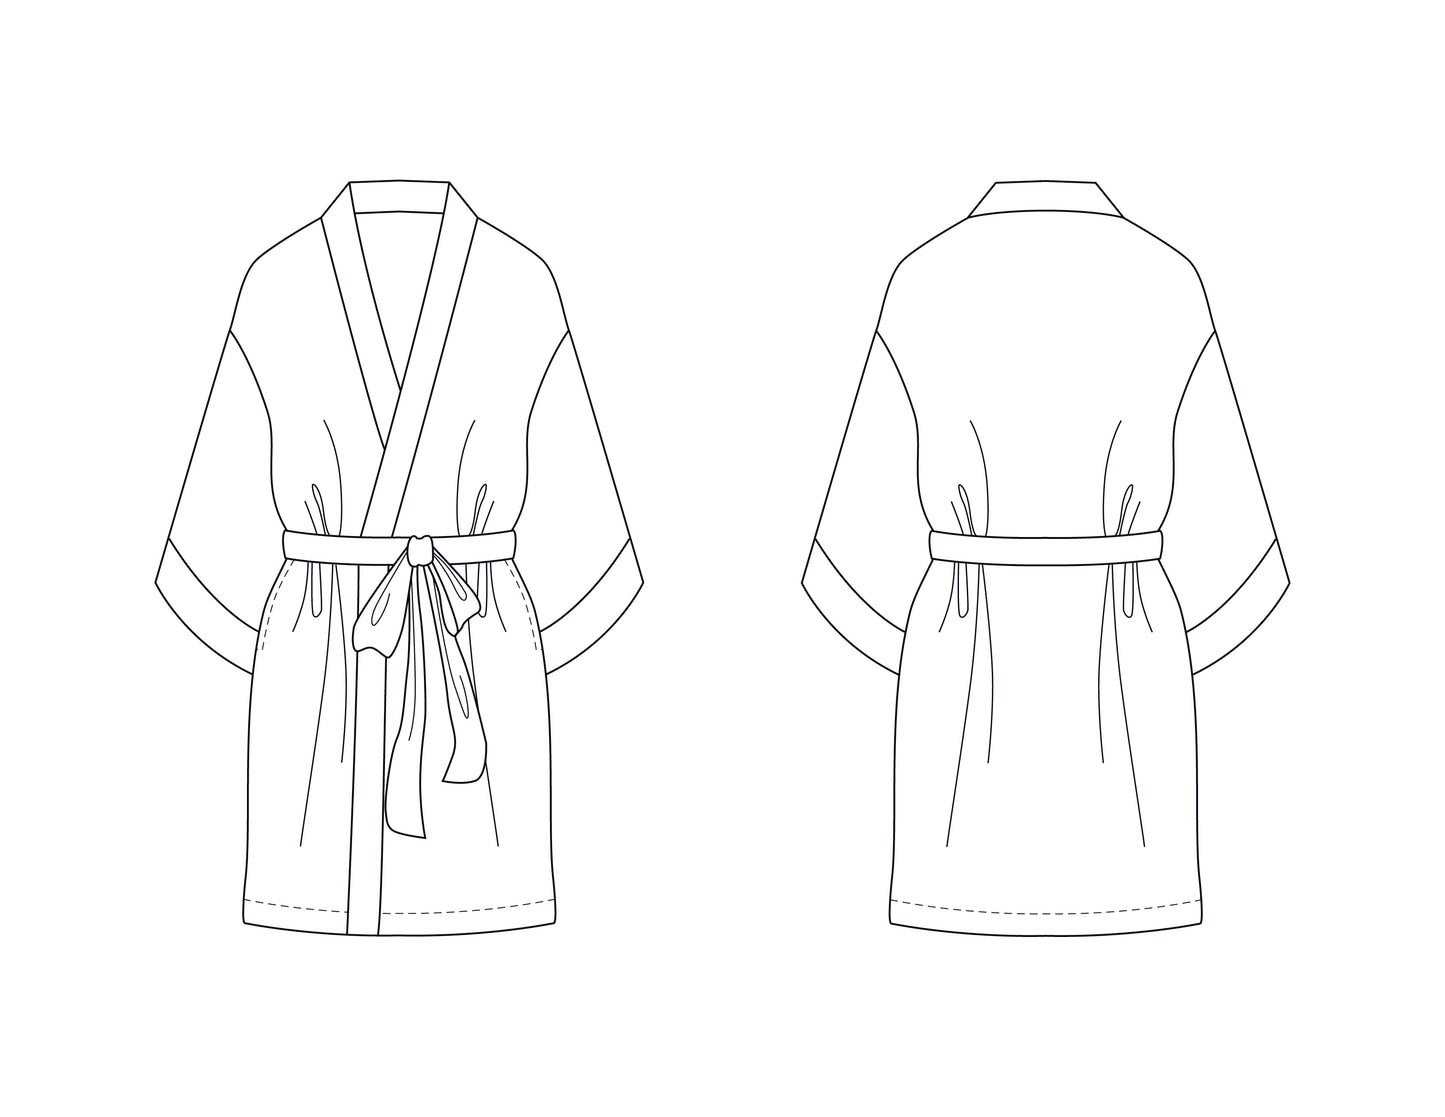 Novelty Wrap Kimono Robe Sewing Pattern